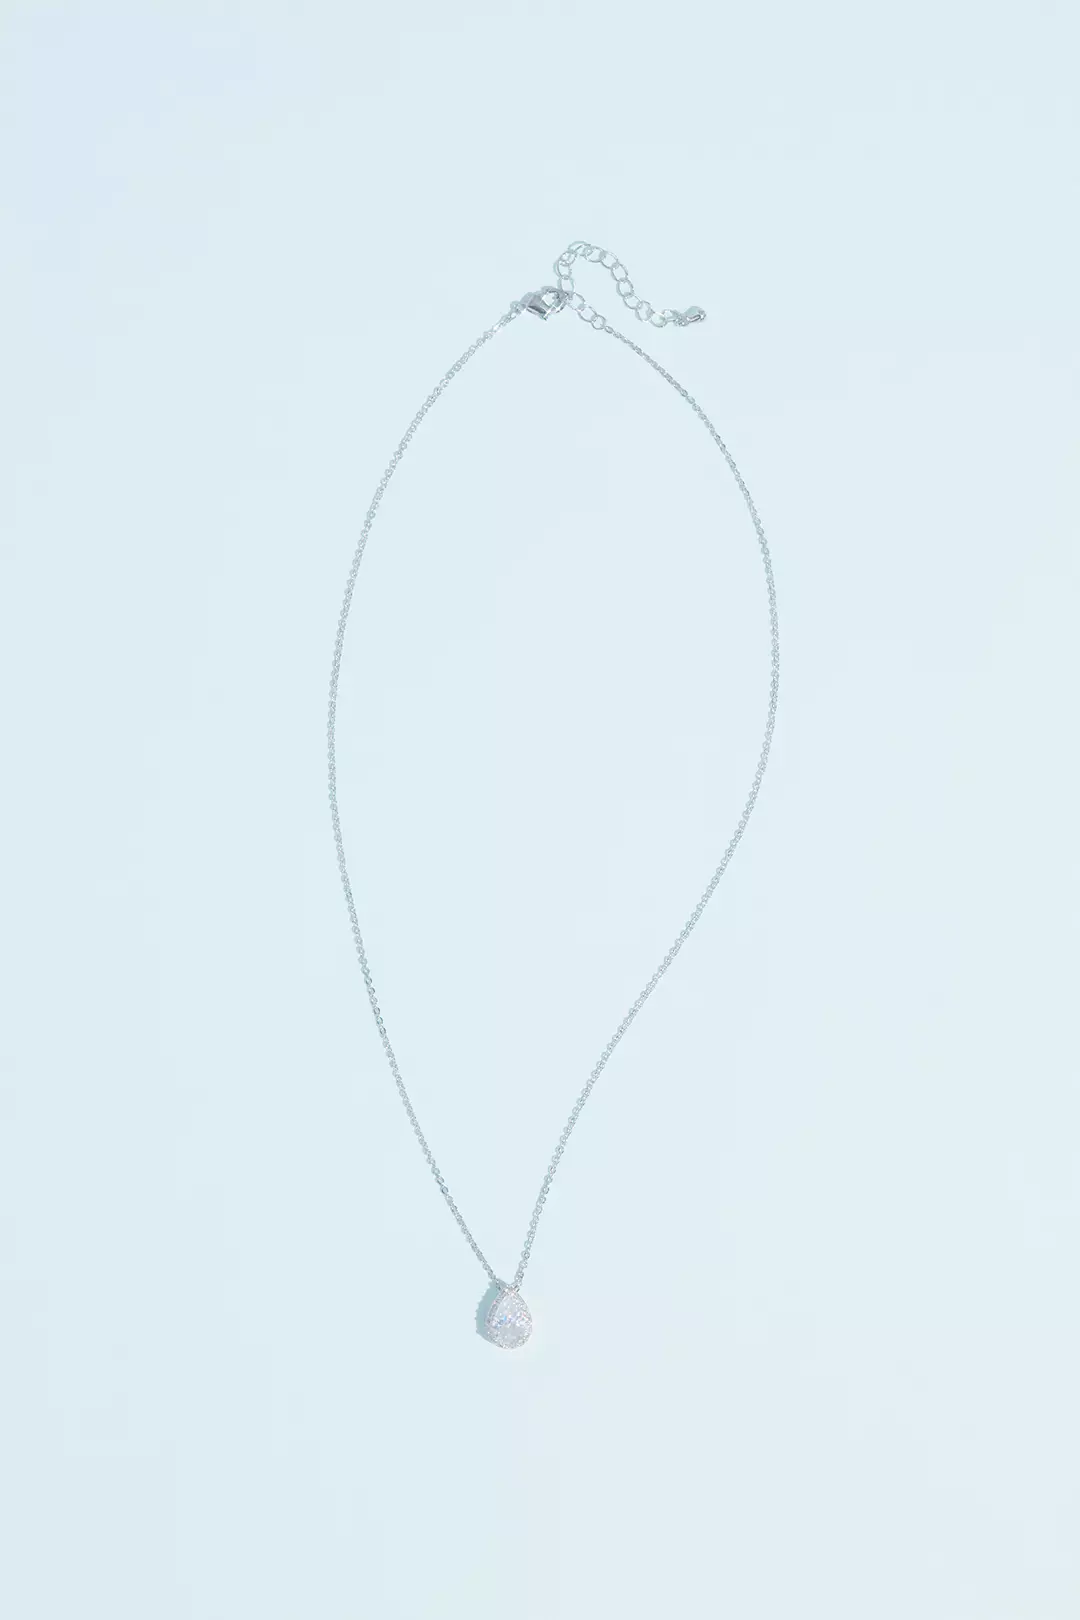 Haloed Pear Shaped Cubic Zirconia Pendant Necklace Image